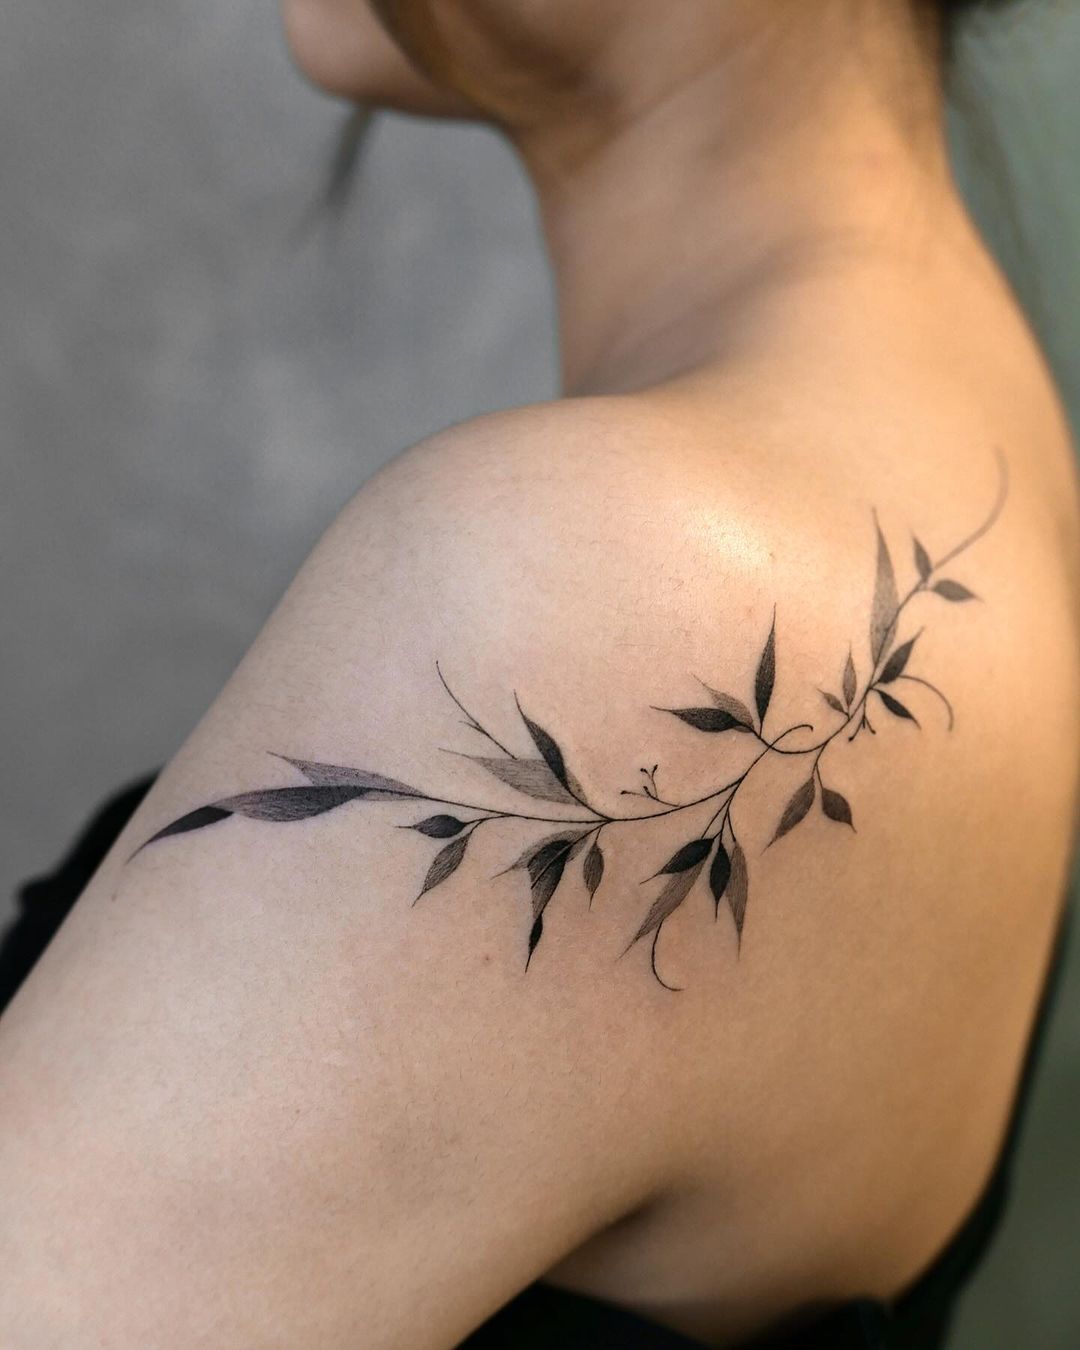 Leaf tattoo for women by tattooist kam4